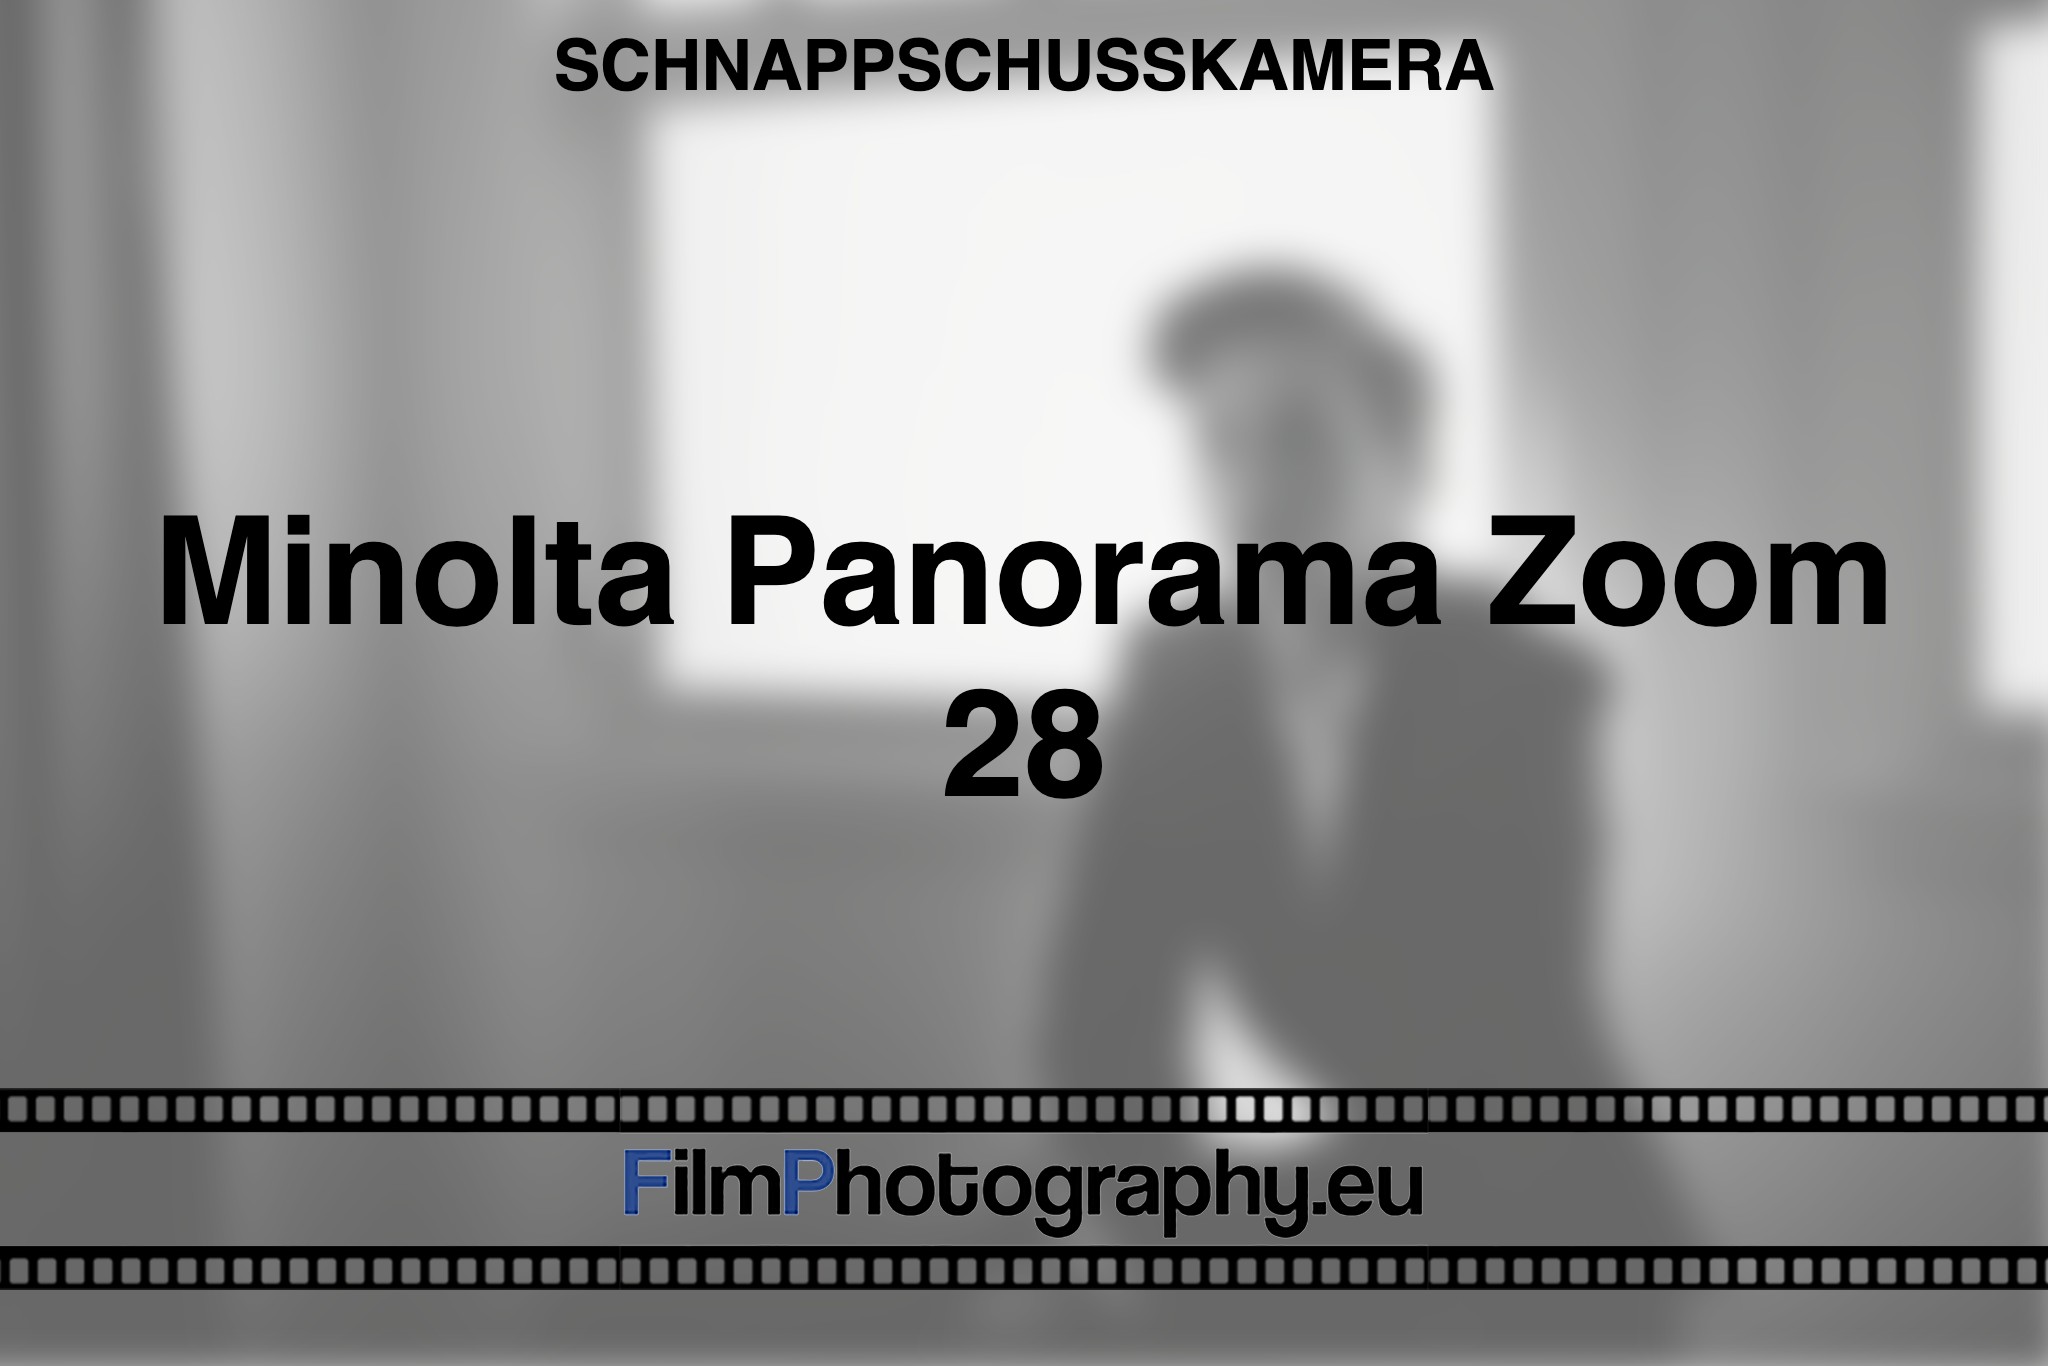 minolta-panorama-zoom-28-schnappschusskamera-bnv